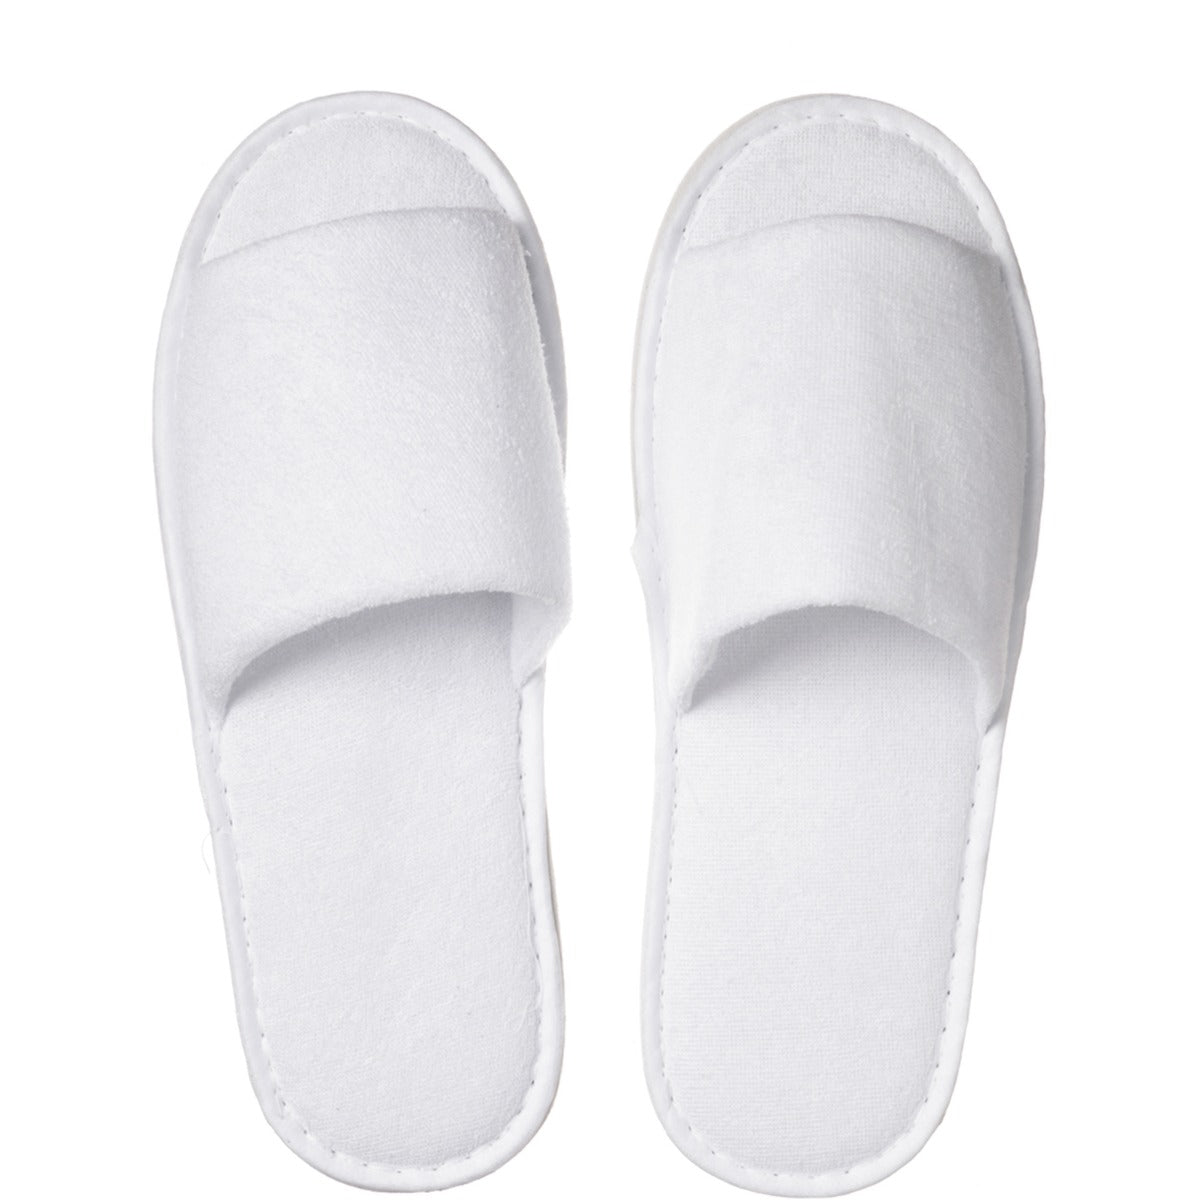 White open toe - Bath slipper in paper band